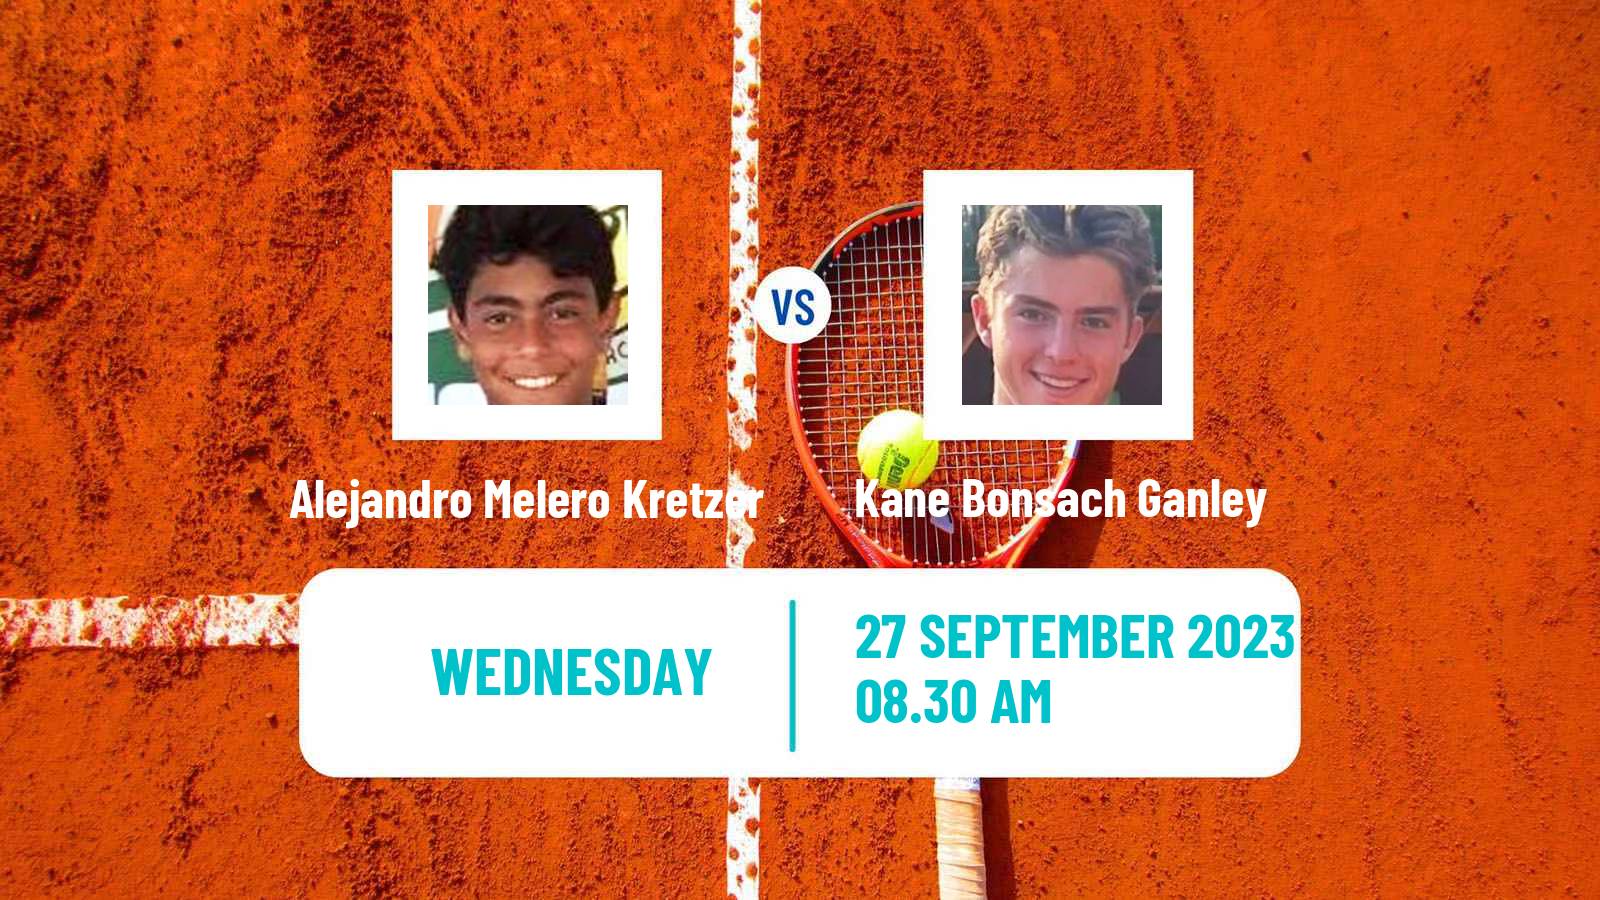 Tennis ITF M25 Sabadell 2 Men Alejandro Melero Kretzer - Kane Bonsach Ganley